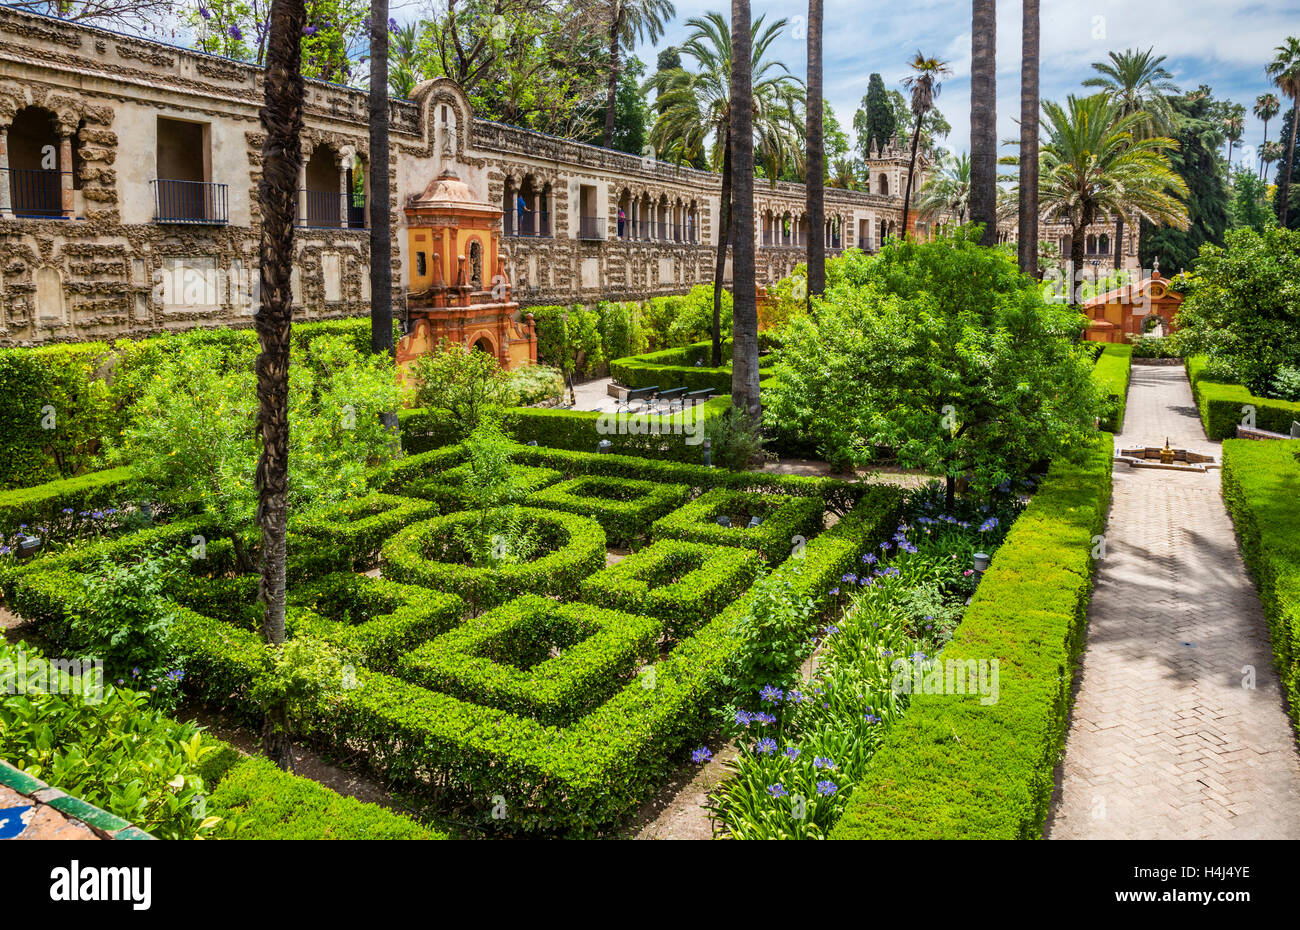 Spanien, Andalusien, Provinz Sevilla, Sevilla, die Gärten der Alcazar Palast Stockfoto